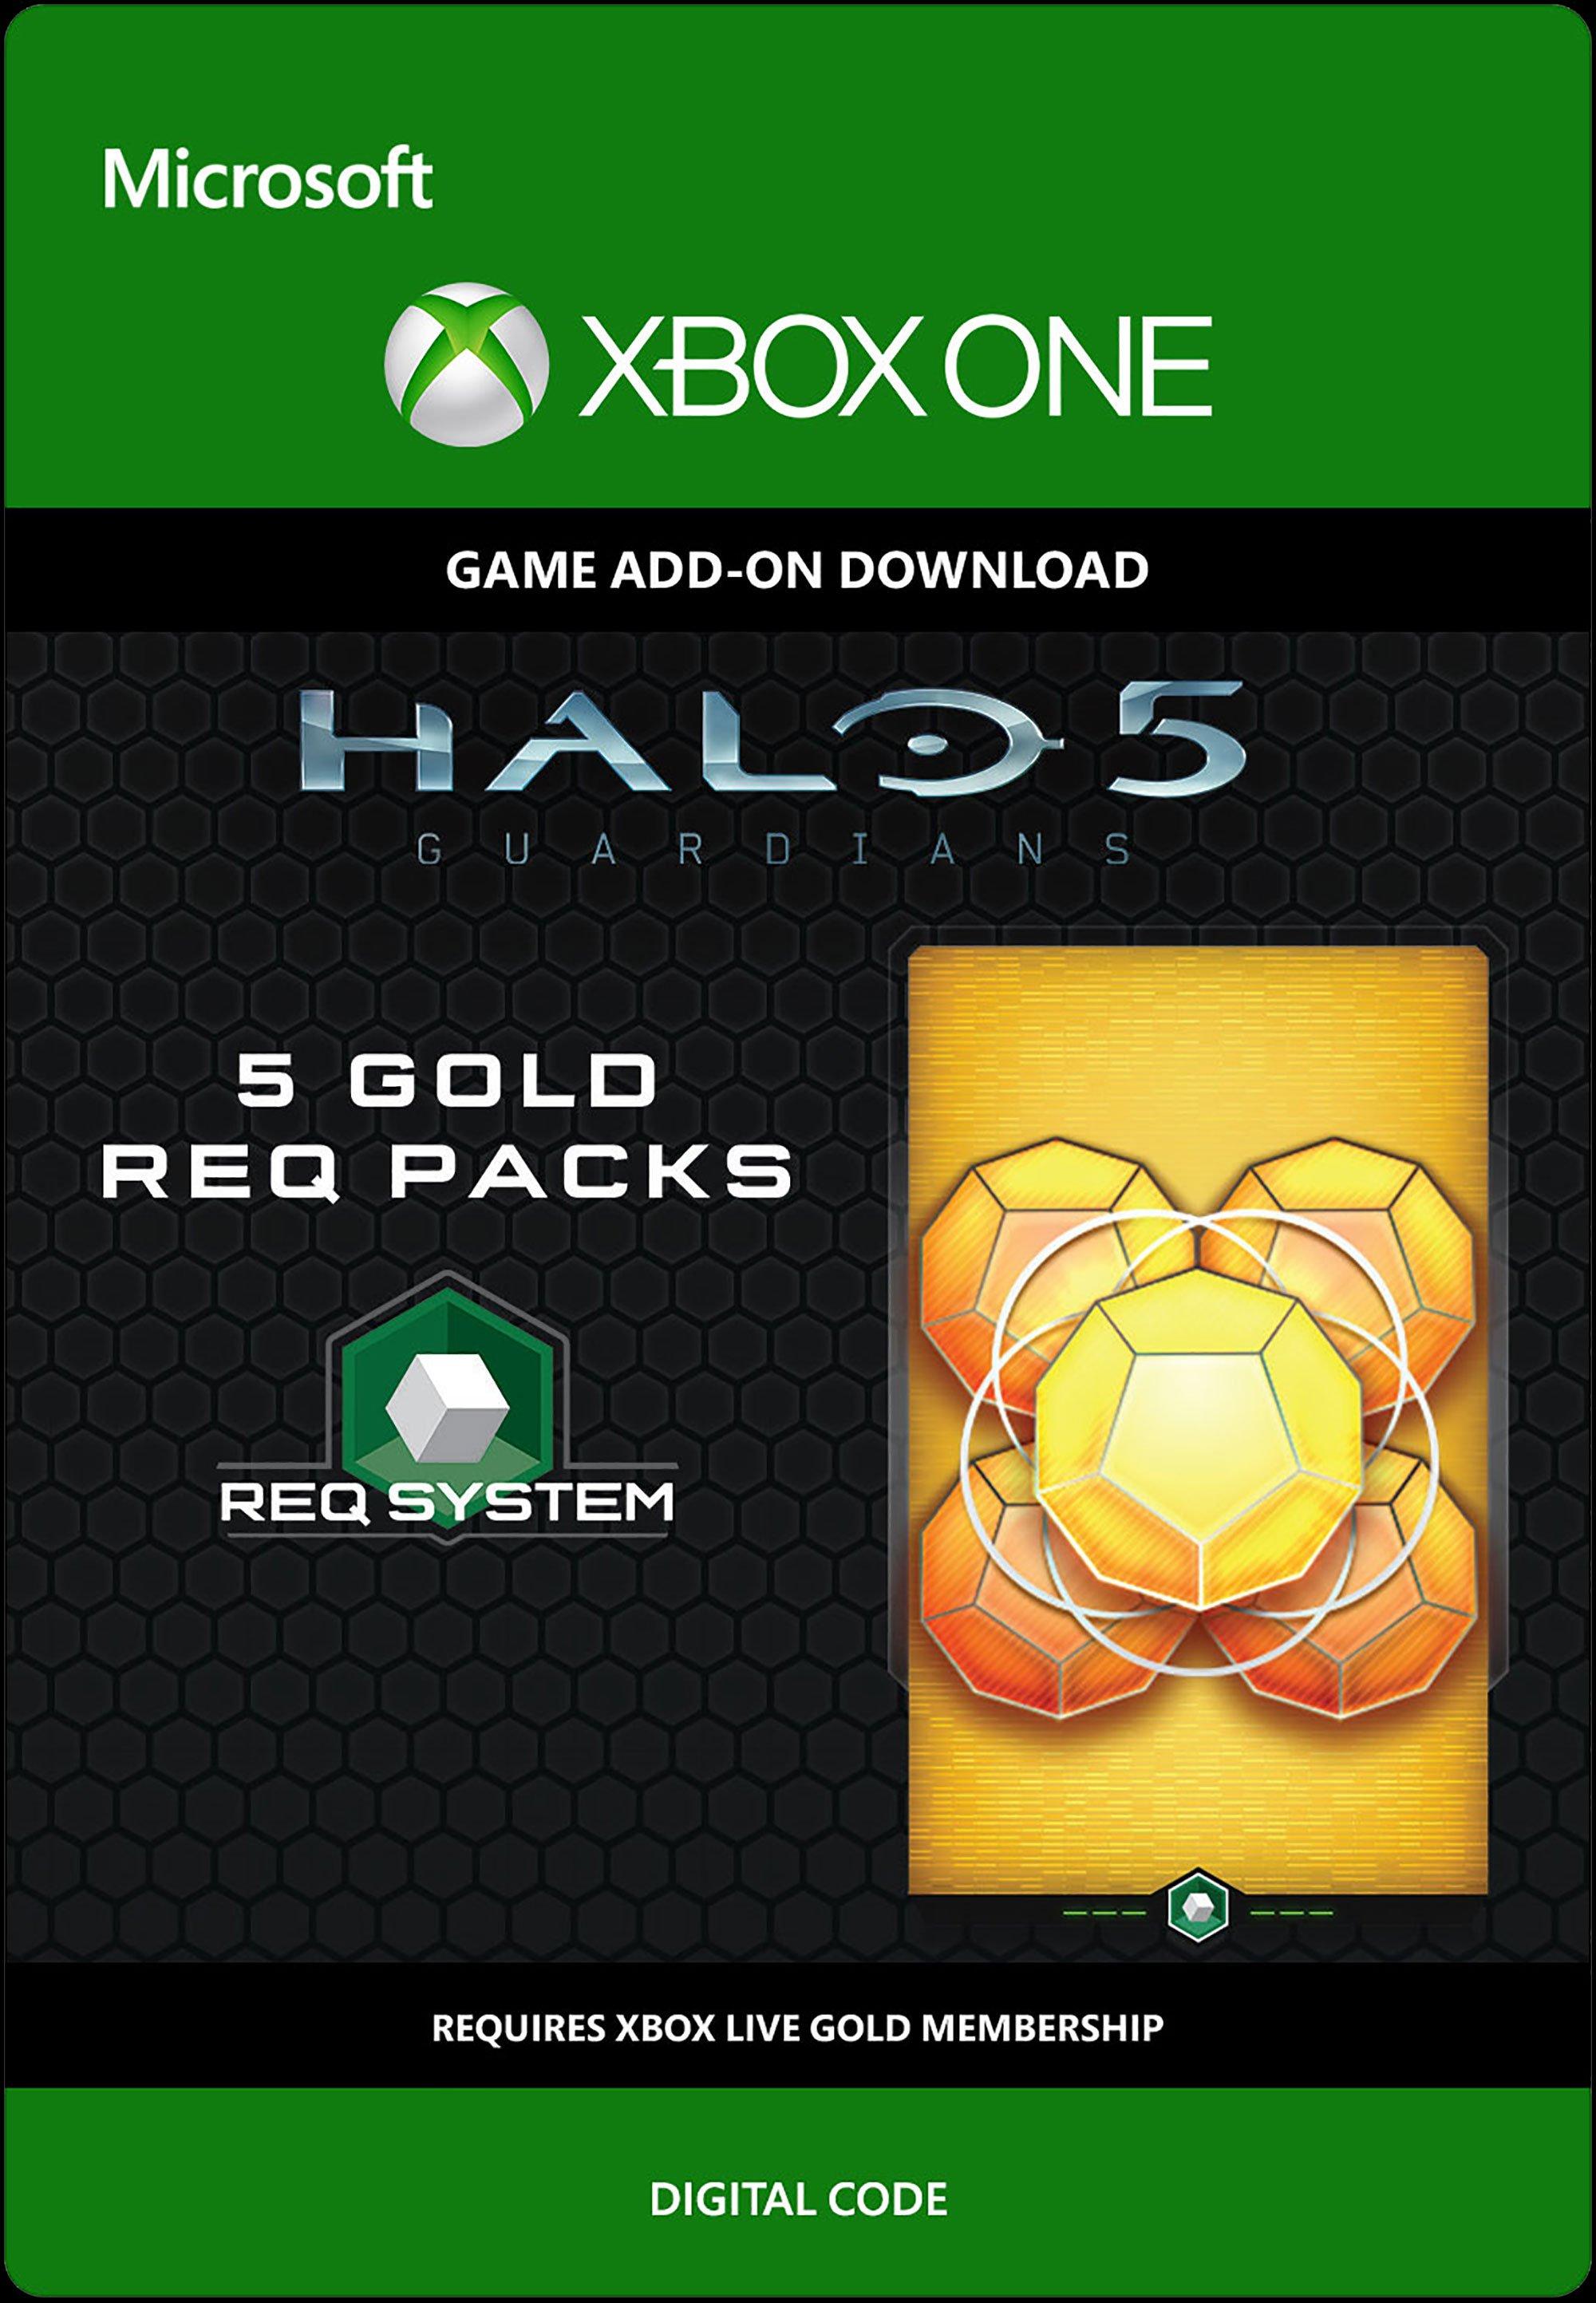 Halo 5: Guardians 5 Gold Req Packs DLC - Xbox One